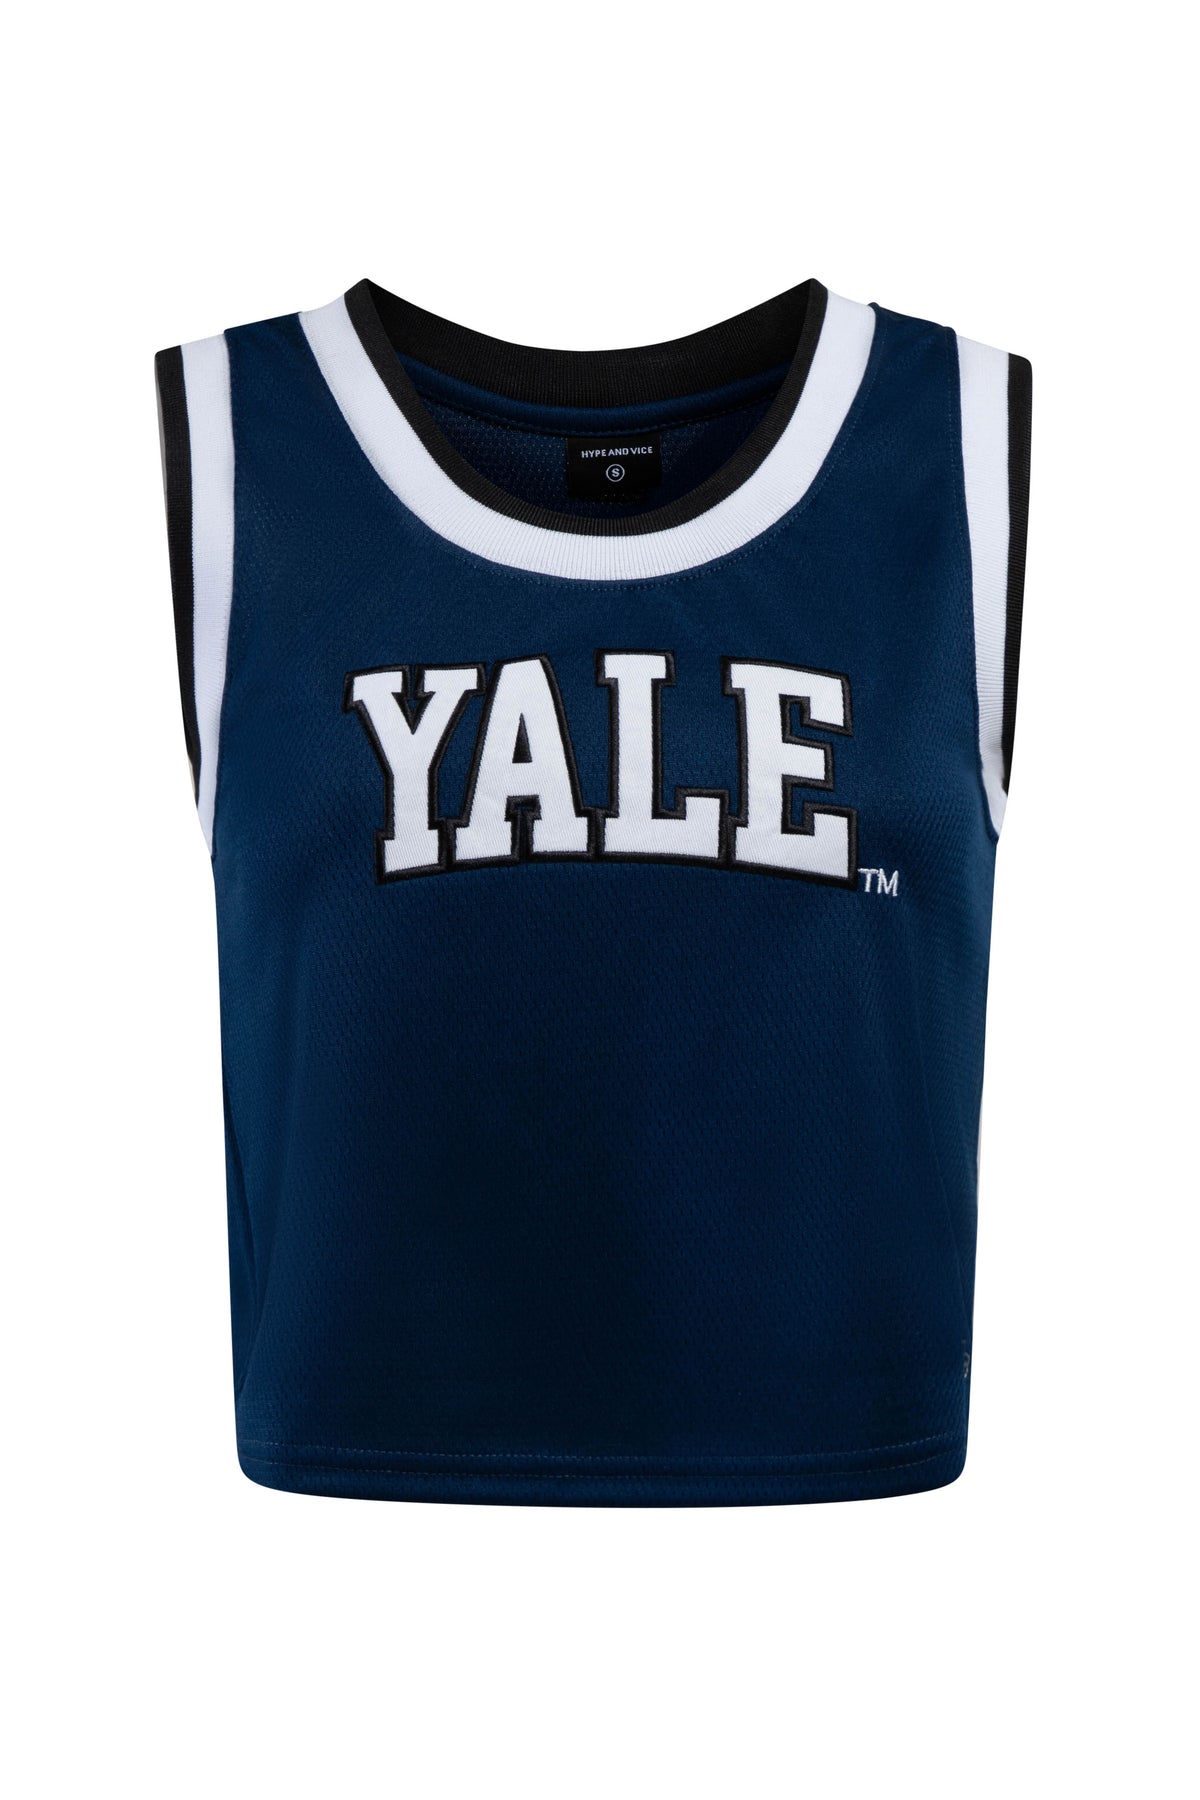 Yale University Basketball Top